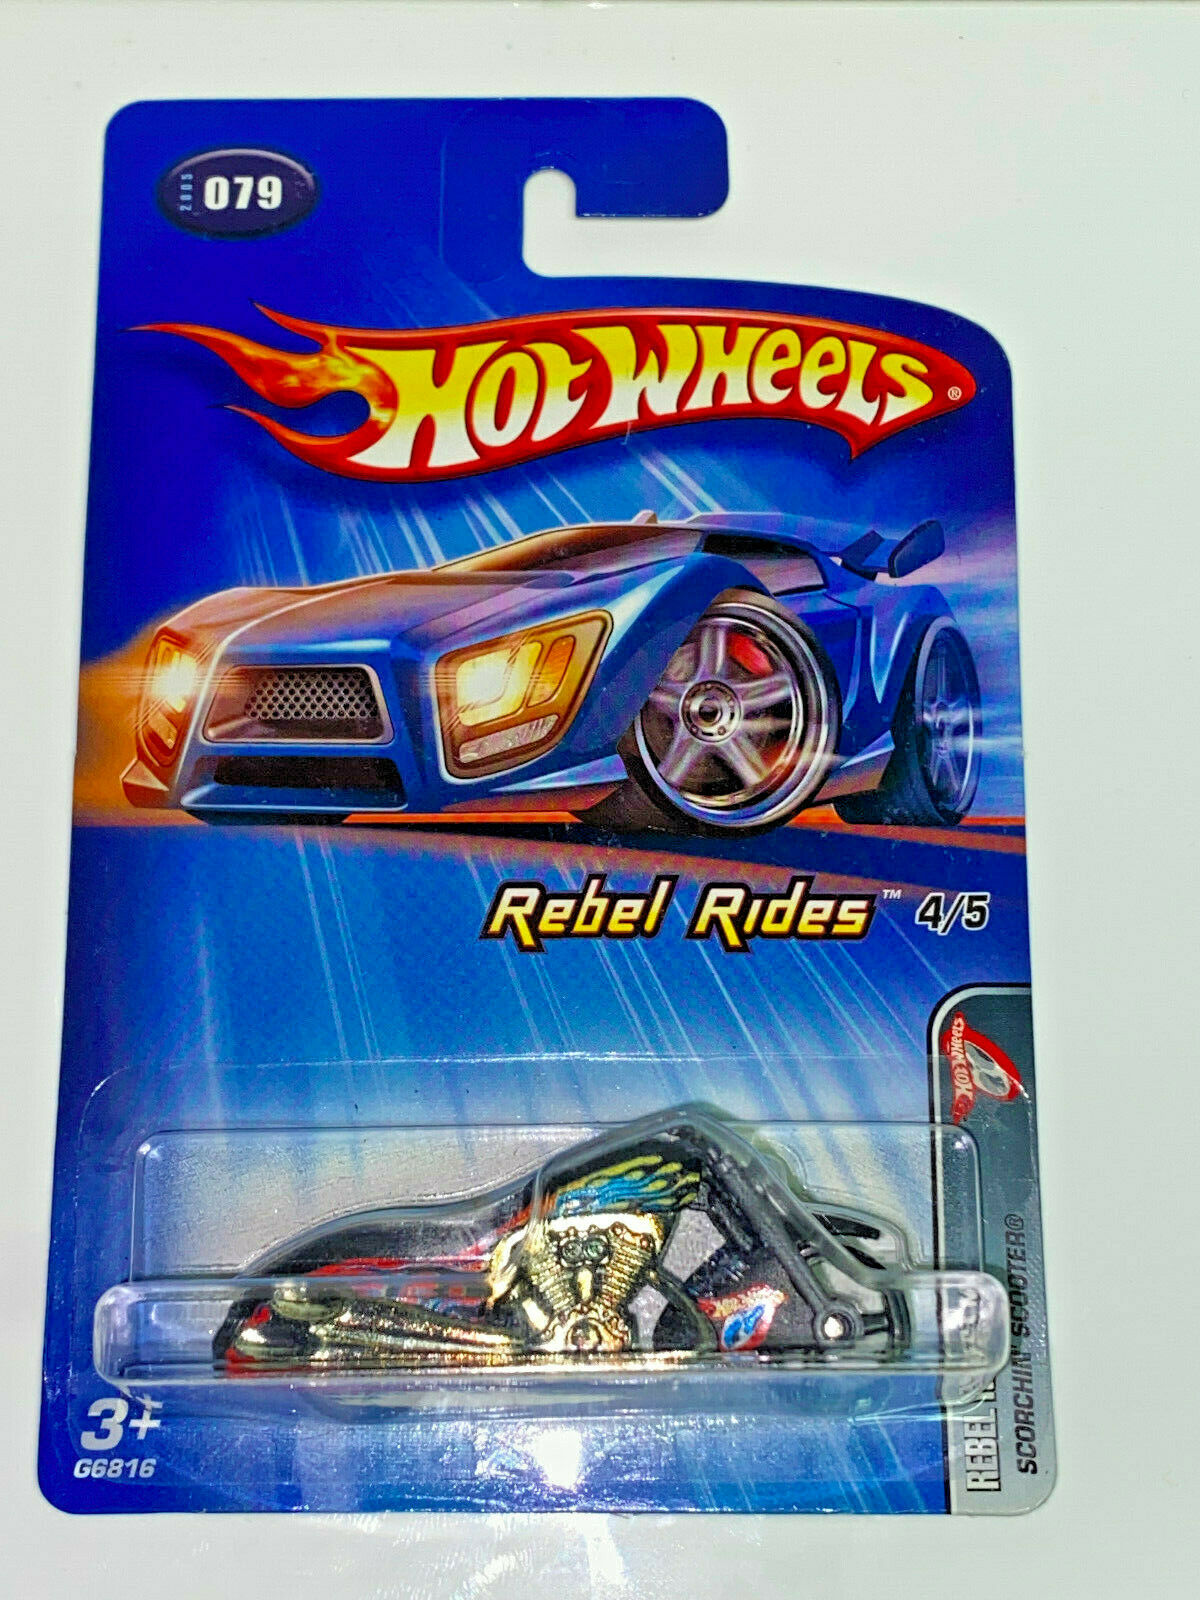 2005 Hot Wheels Rebel Rides Full Set of 5 Cars NIP #076, #077, #078, #079, #080